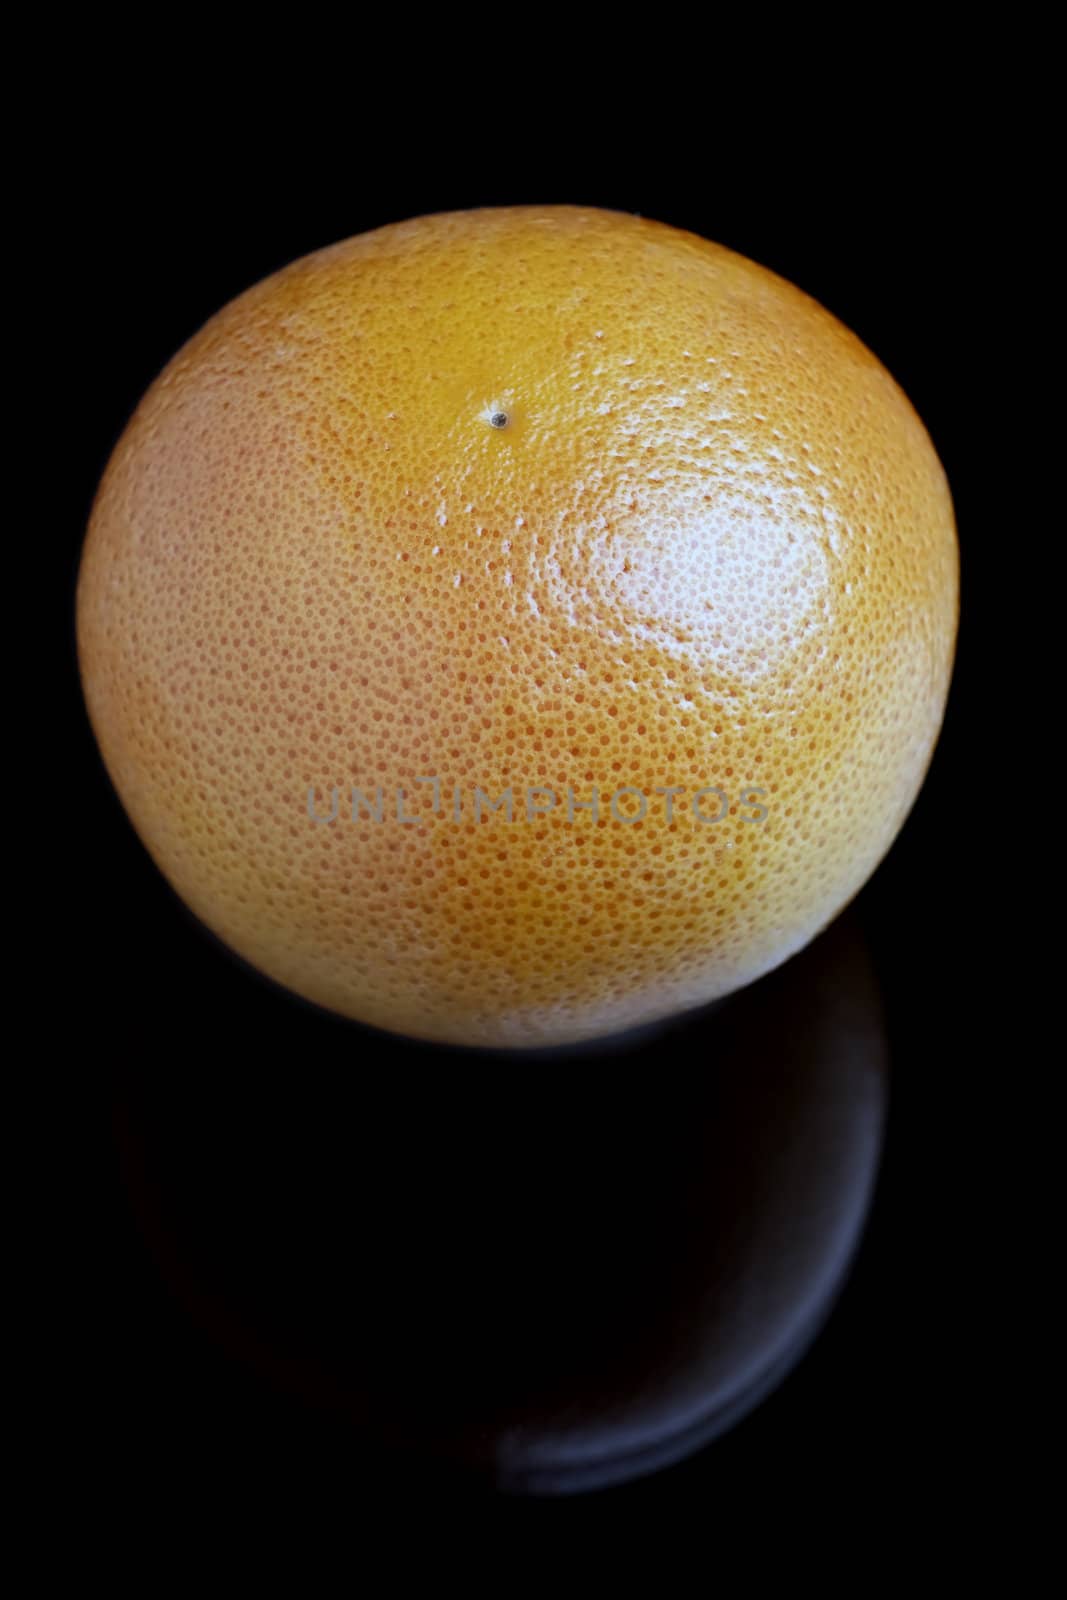 The image of a Fresh grapefruit on black bacground